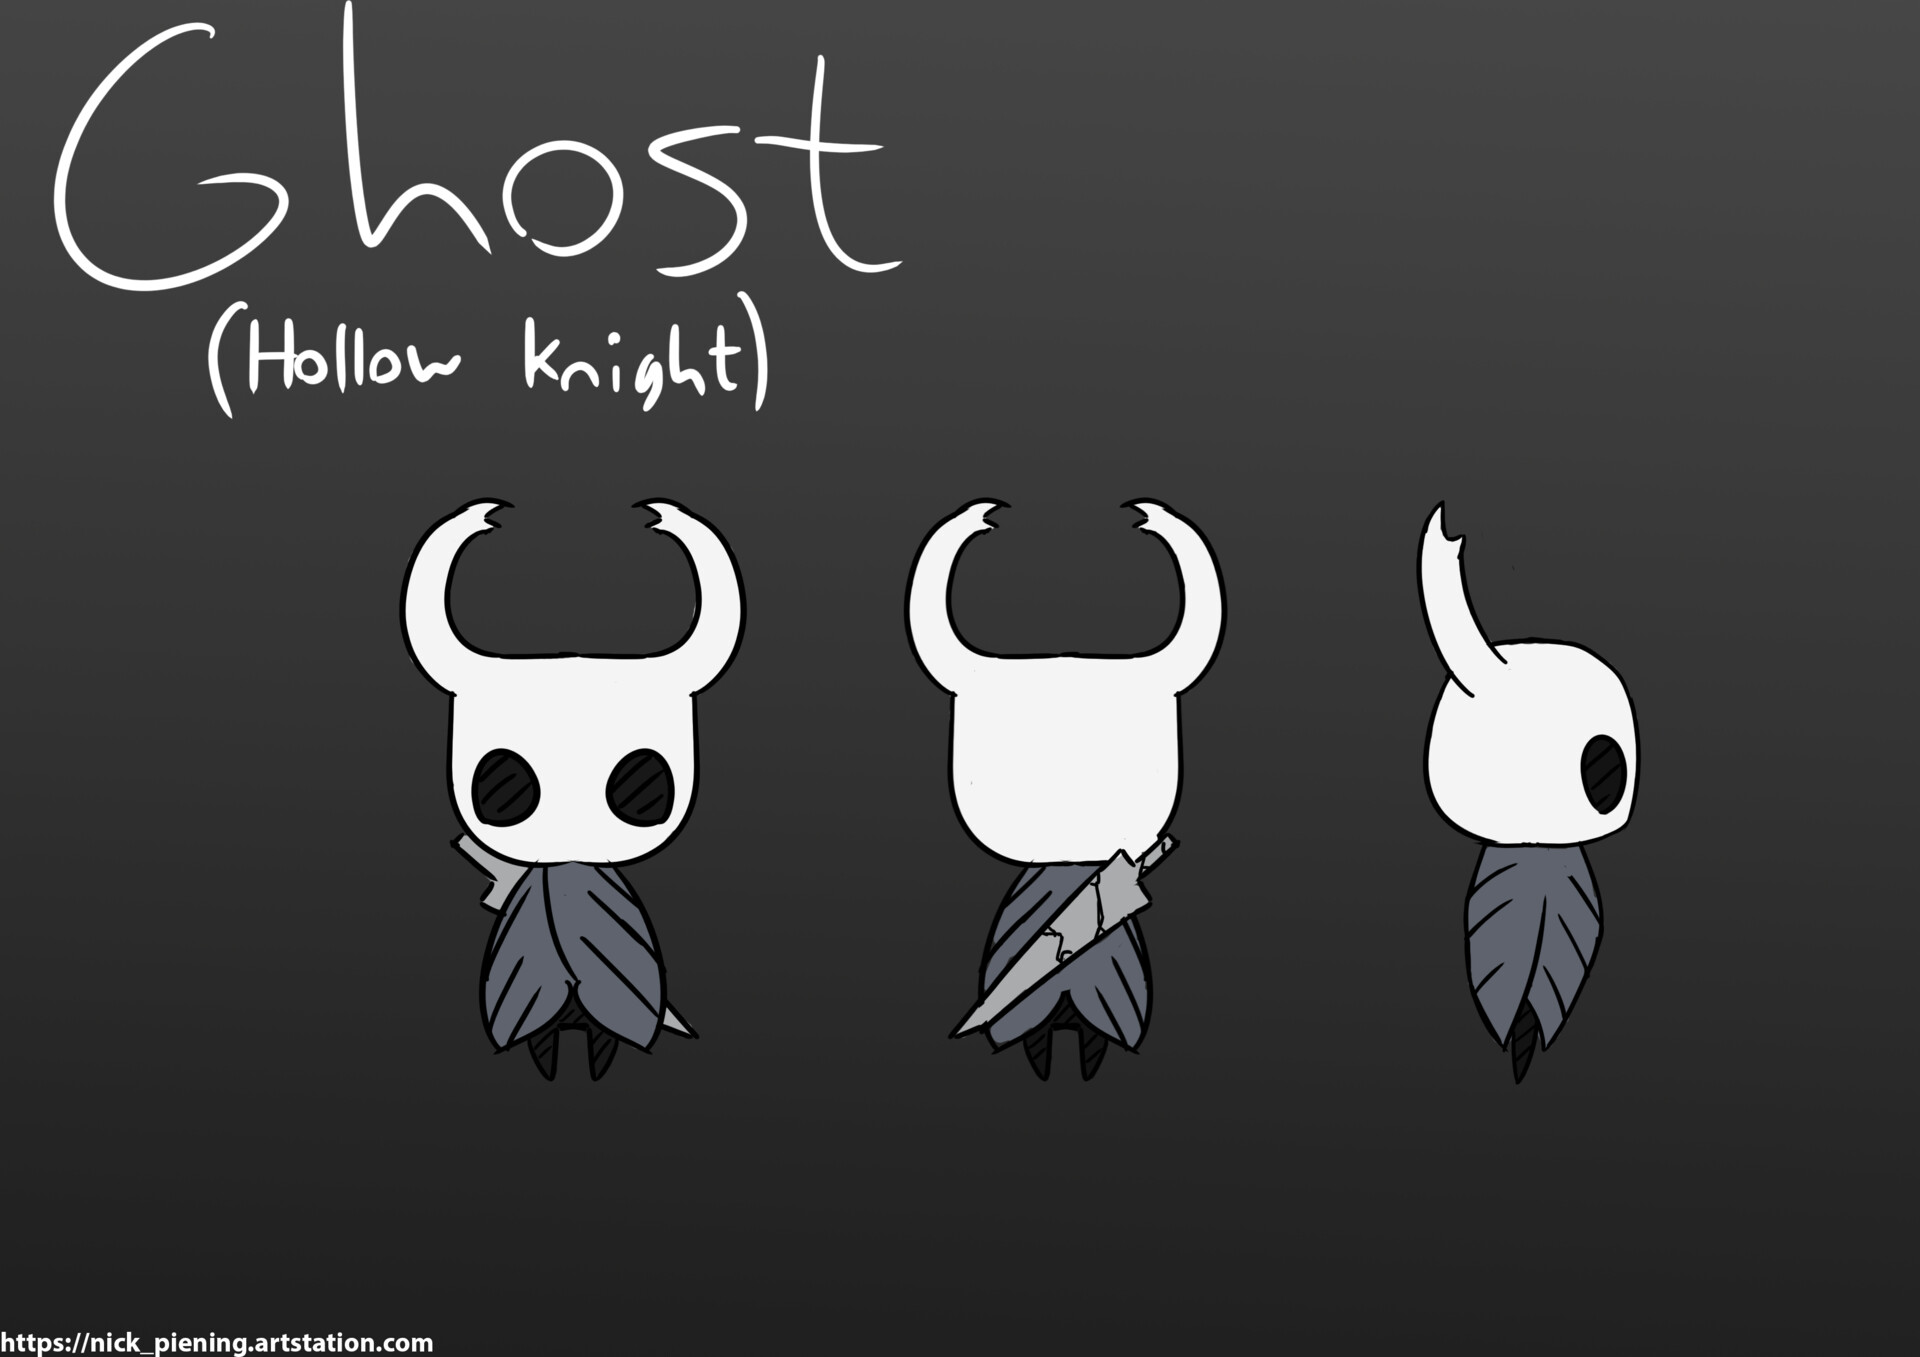 Lampy hollow knight. Hollow Knight призрак. Холлоу Найт референс. Холоунайт главный герой. Hollow Knight рыцарь.